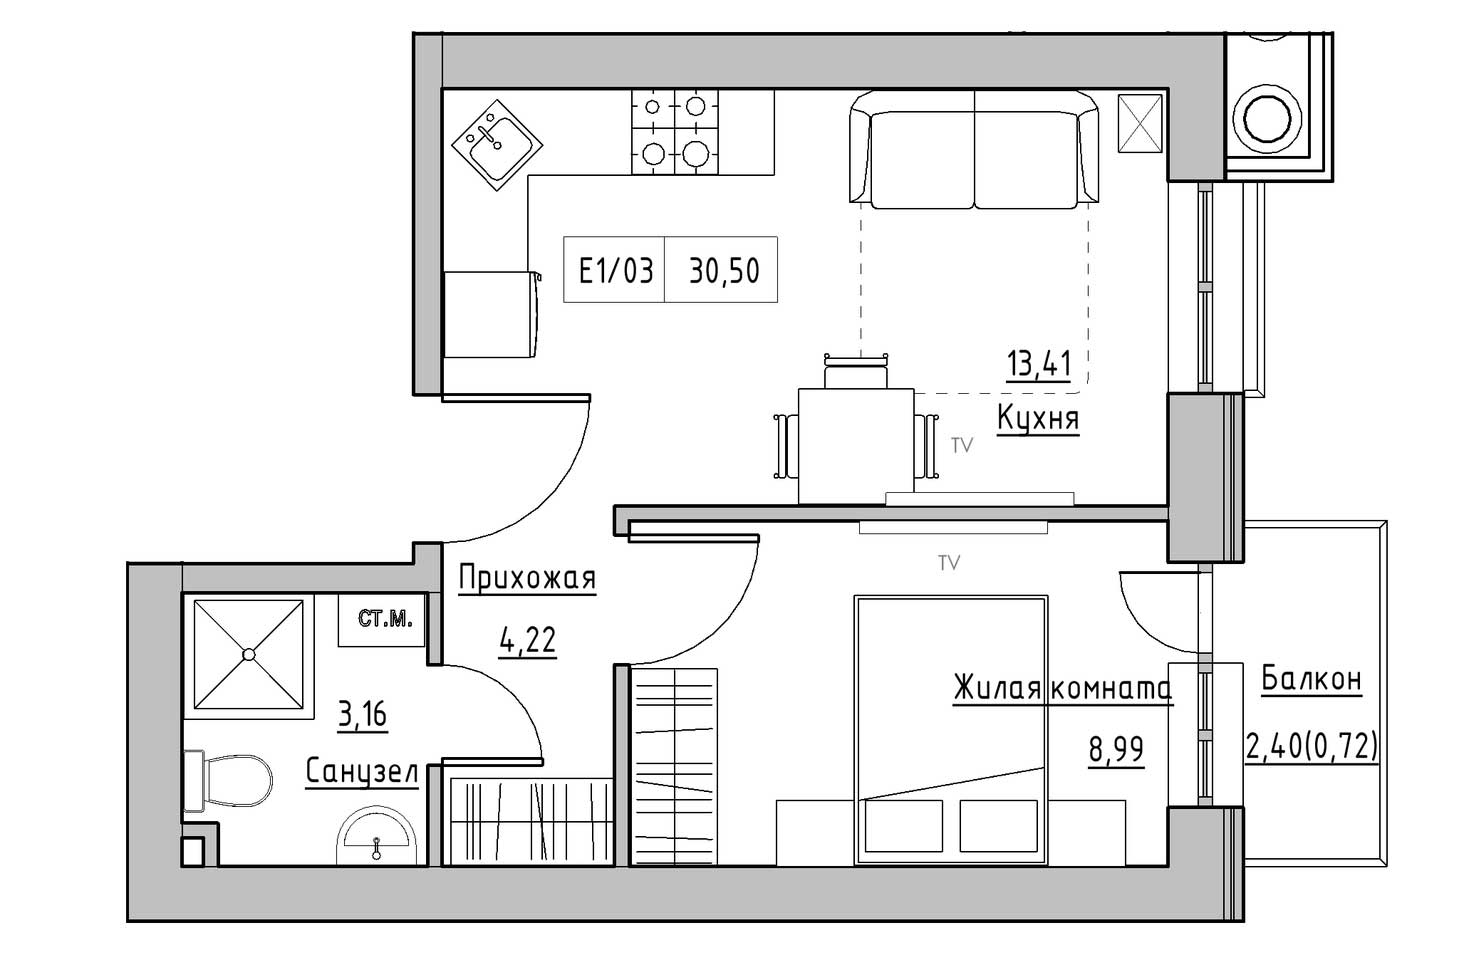 Planning 1-rm flats area 30.5m2, KS-009-02/0002.